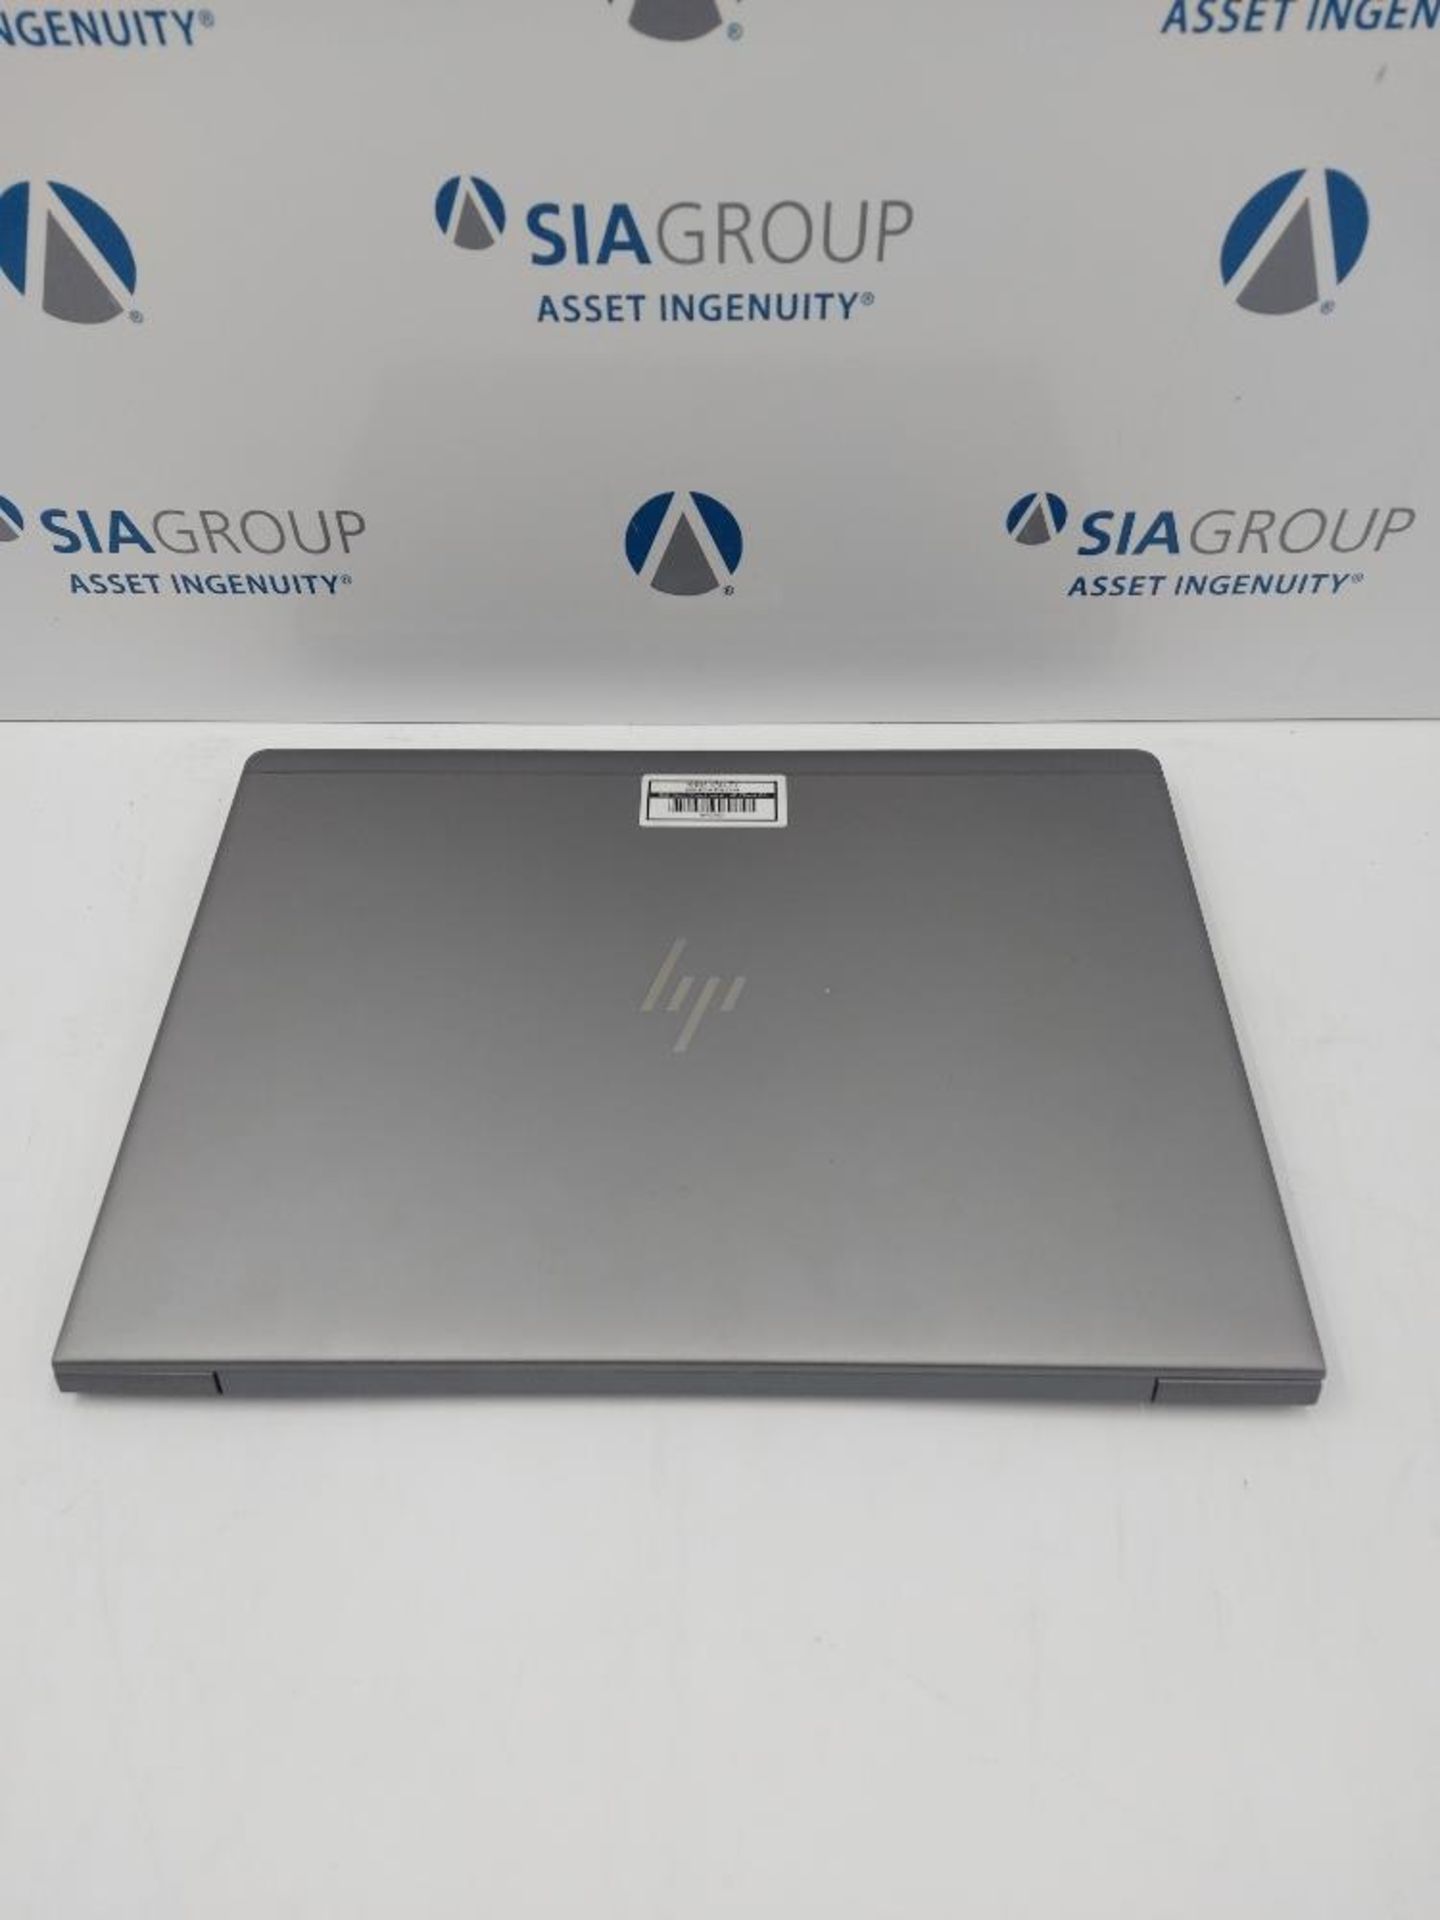 HP Zbook 14u G5 Laptop with Flight Case - Image 4 of 7